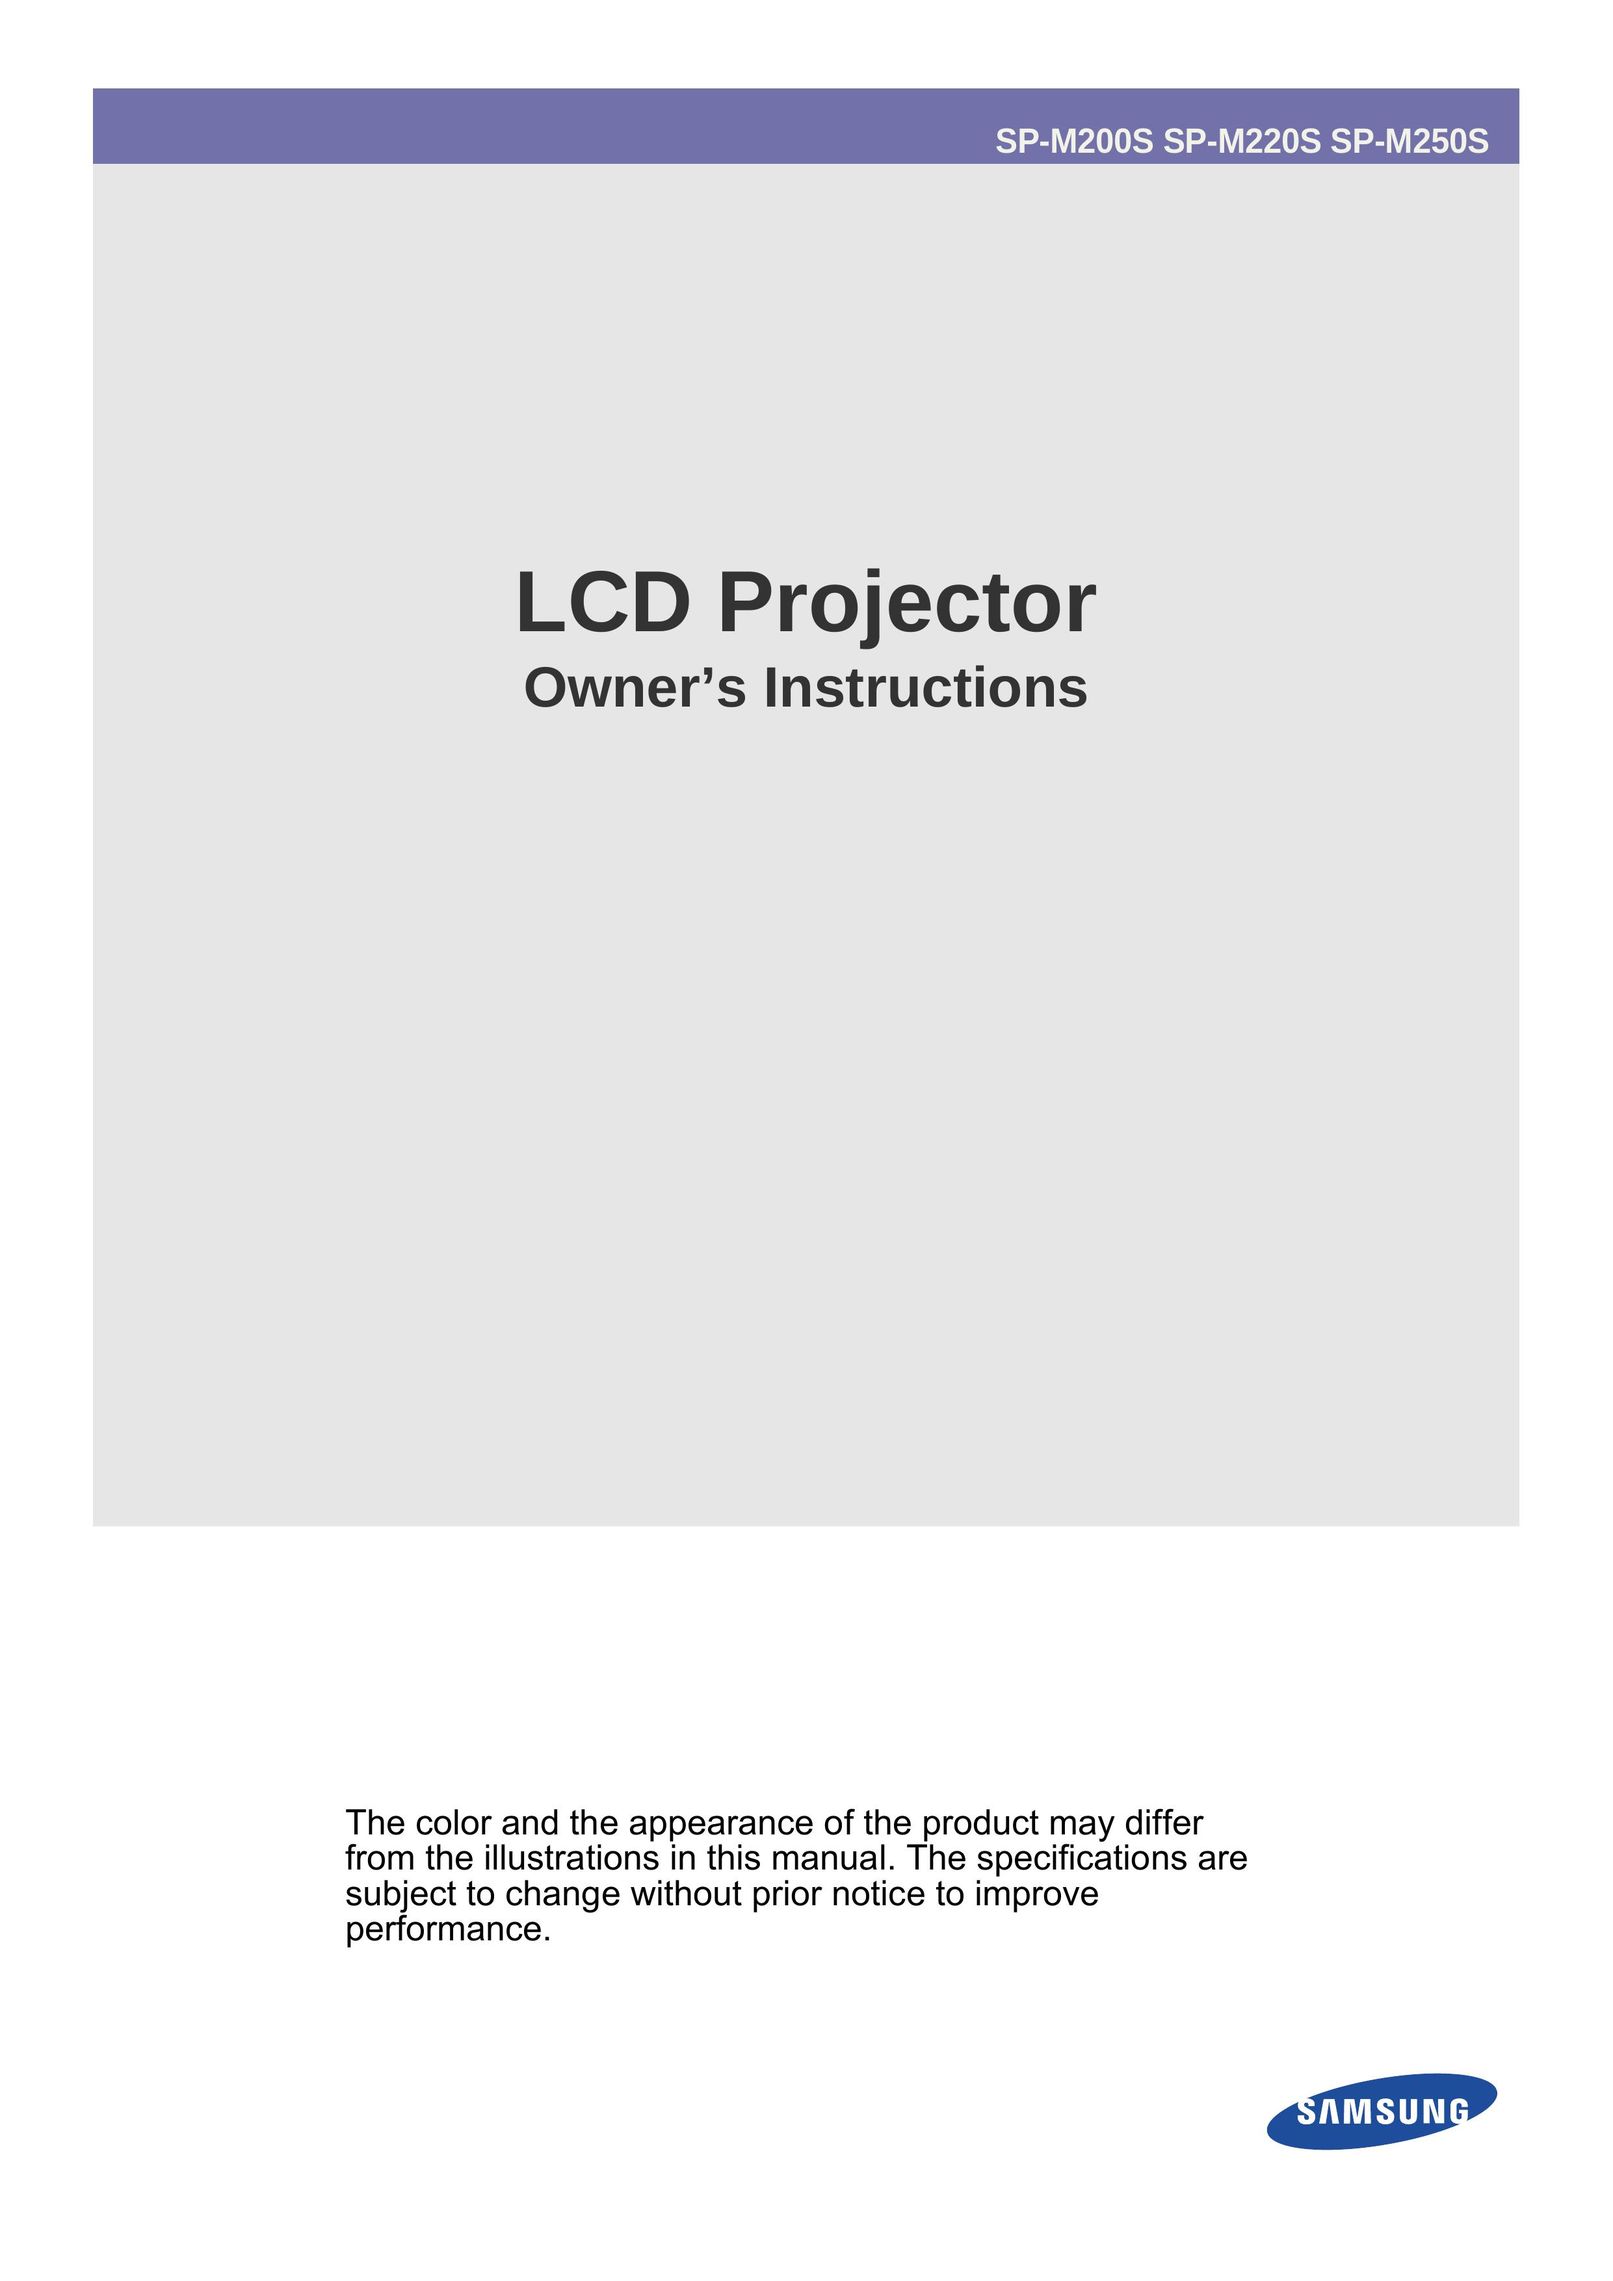 Samsung BP59-00140E-01 Projector User Manual